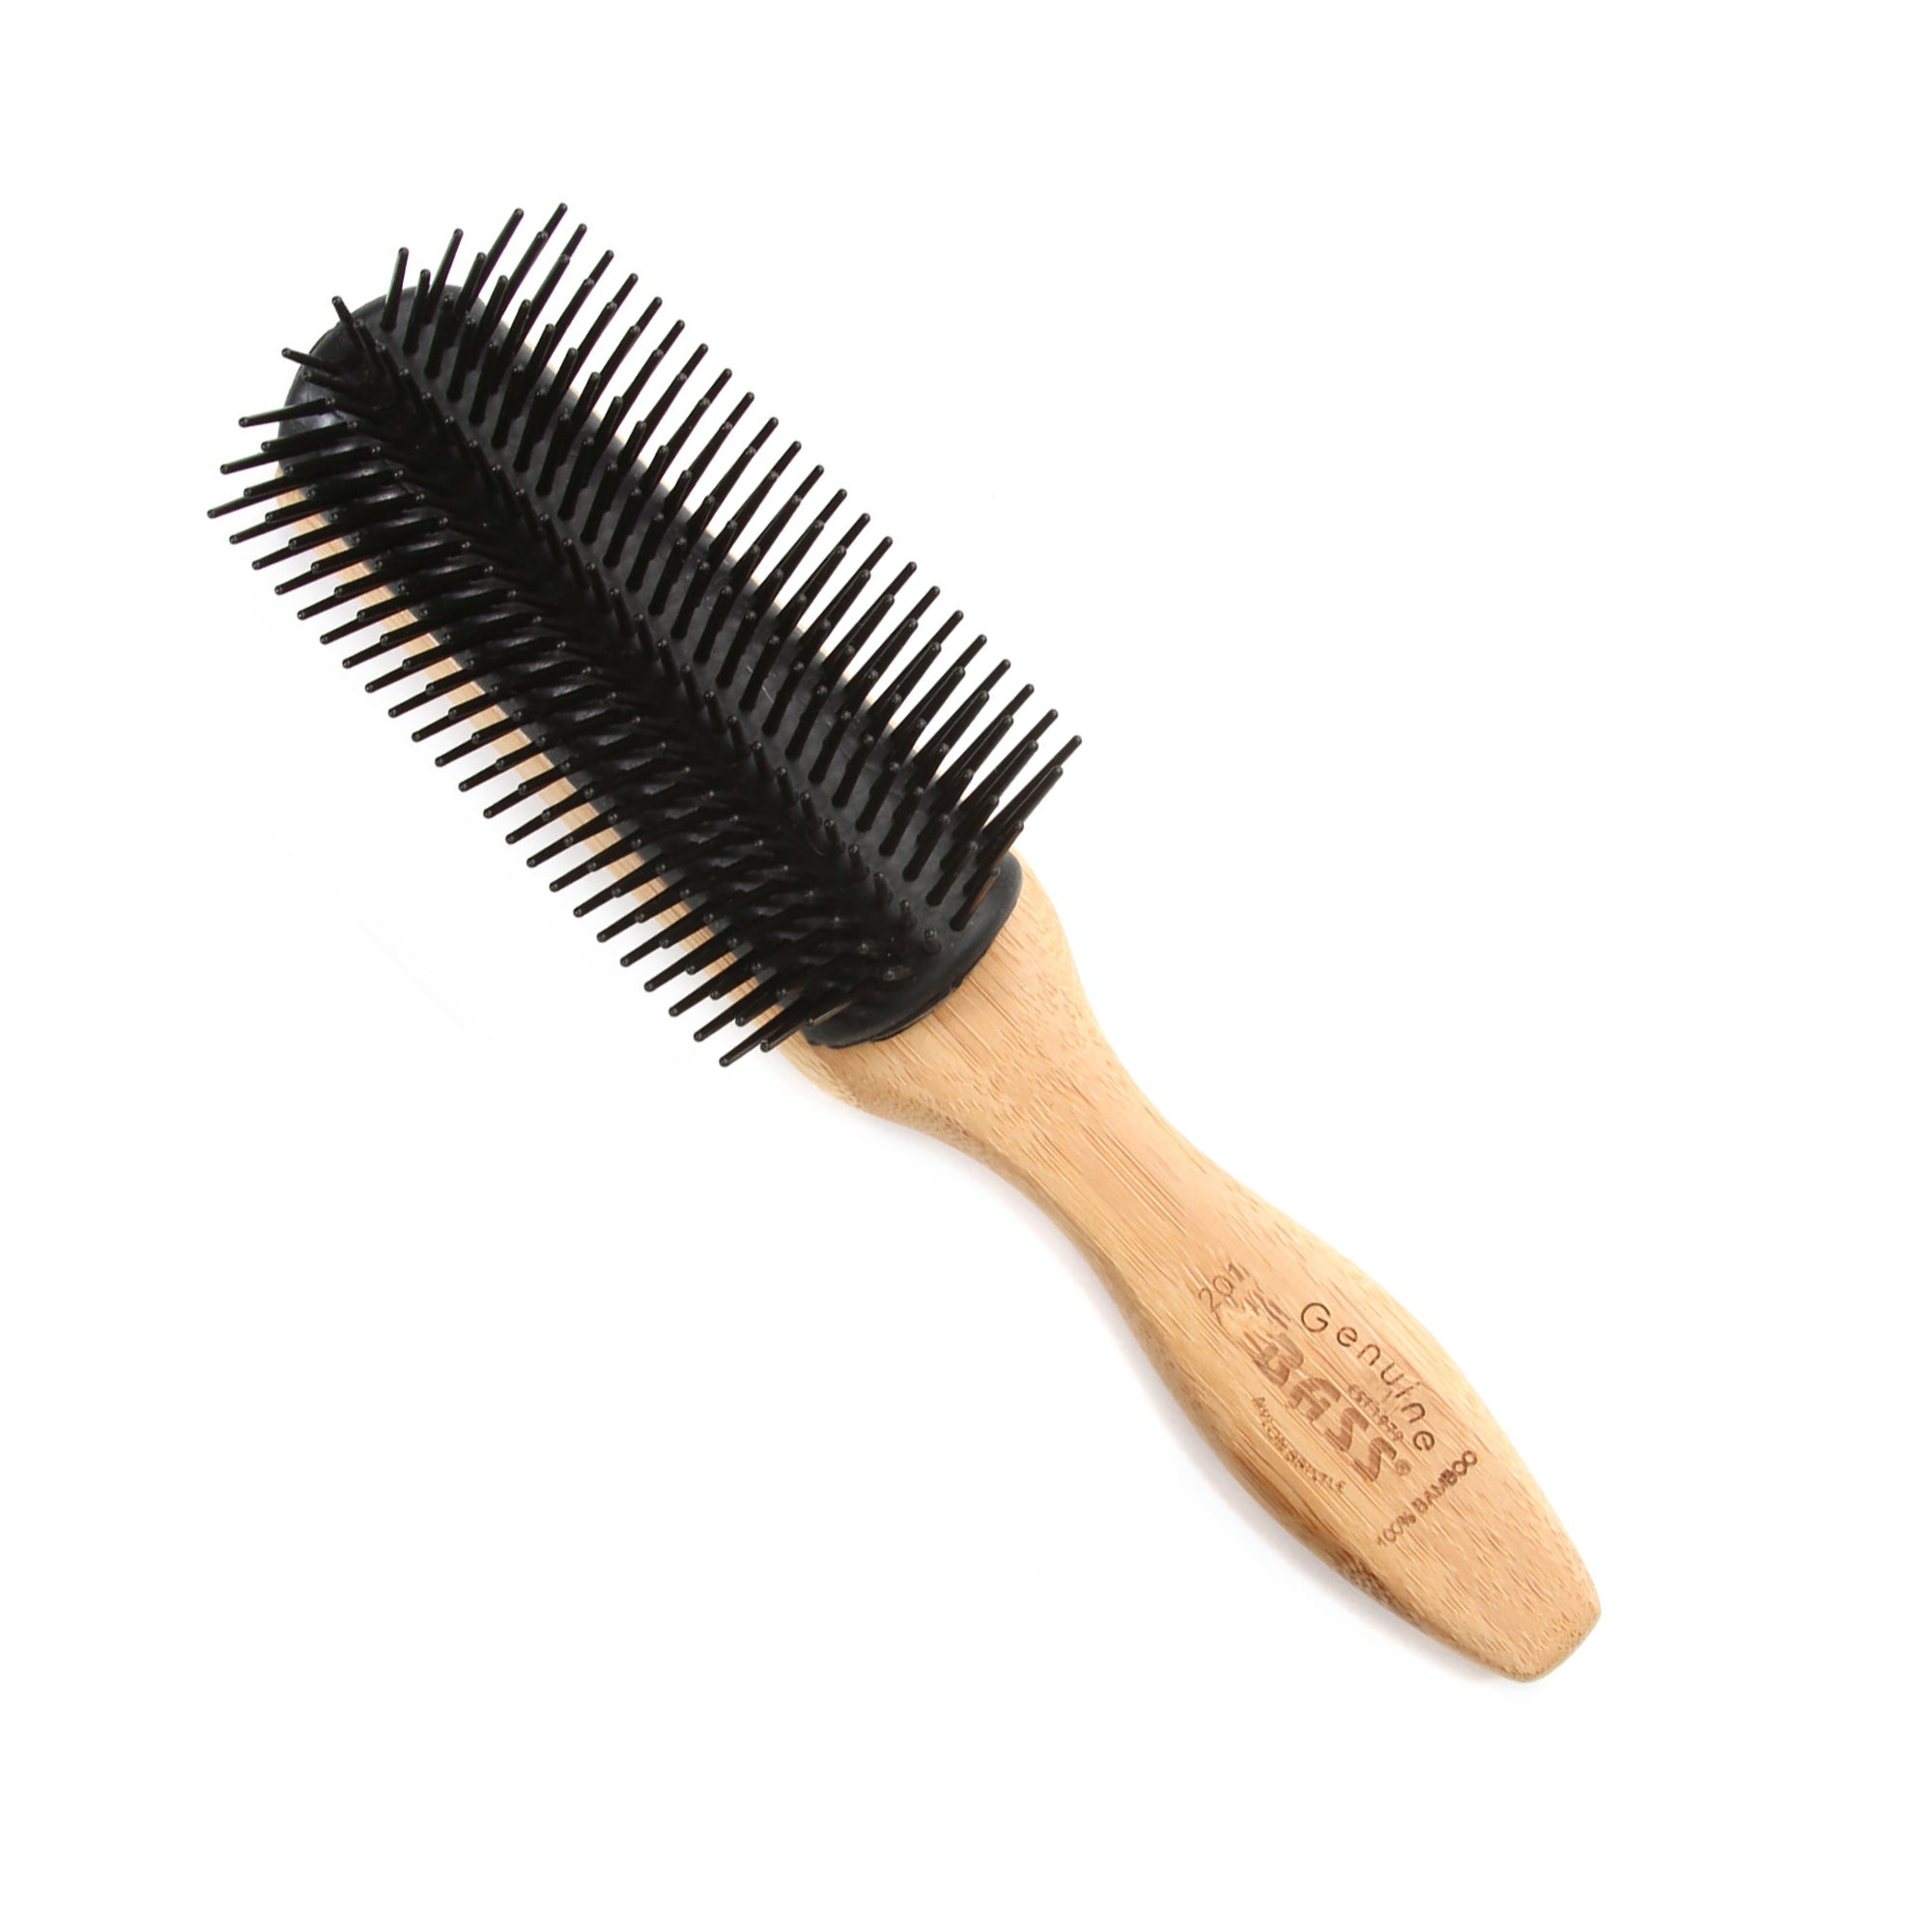 Bass Brushes 201 Jet Black | Classic 9 Row Style Hairbrush with Nylon Pins / 201-JTB